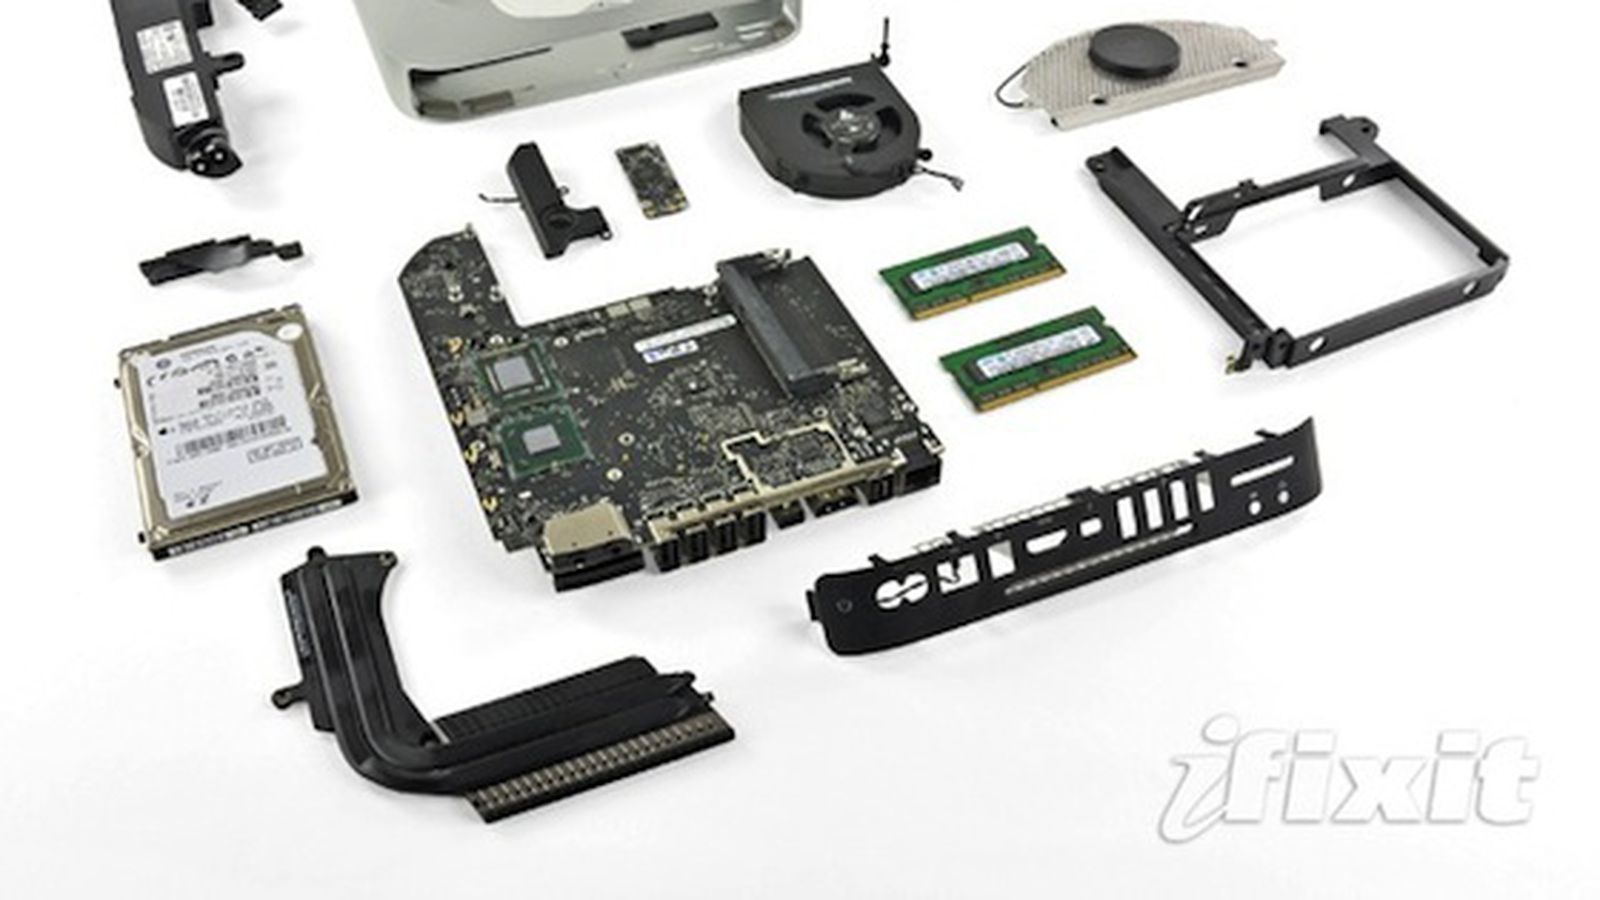 M1 Mac mini teardown reveals smaller logic board, non-upgradeable